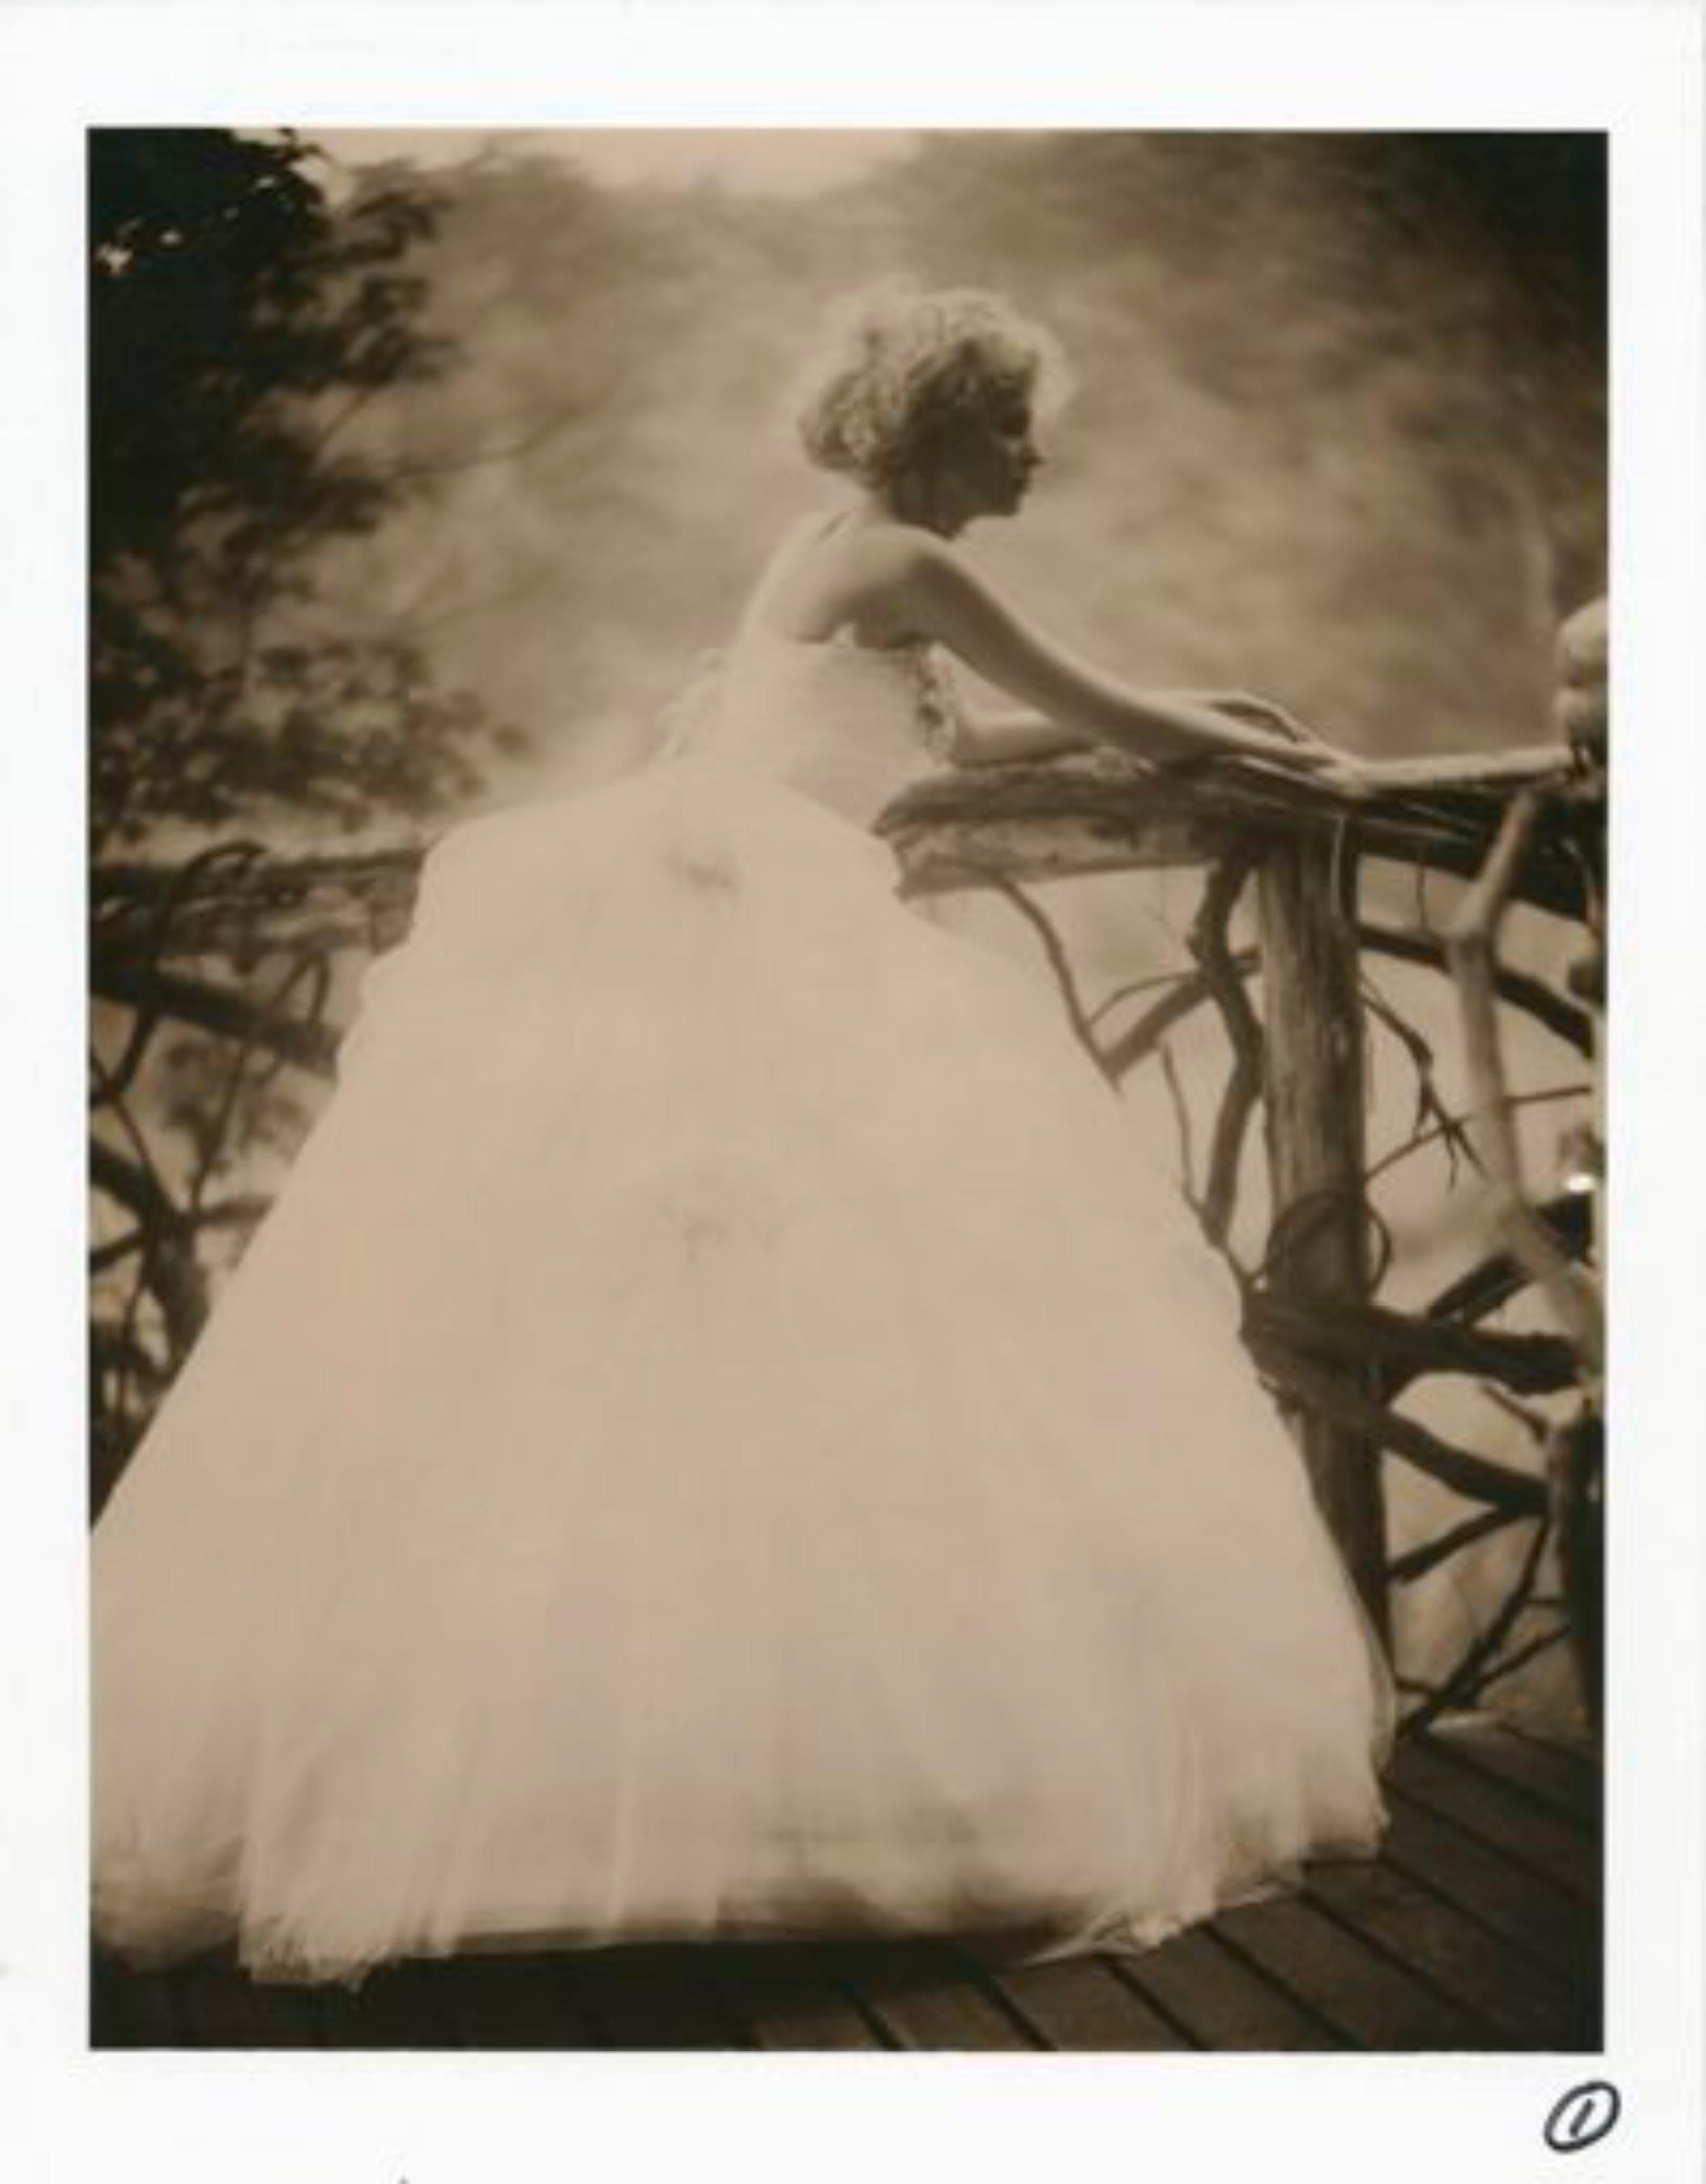 Jose Picayo Black and White Photograph - "Brides Magazine, Bedford", New York, NY, 2003